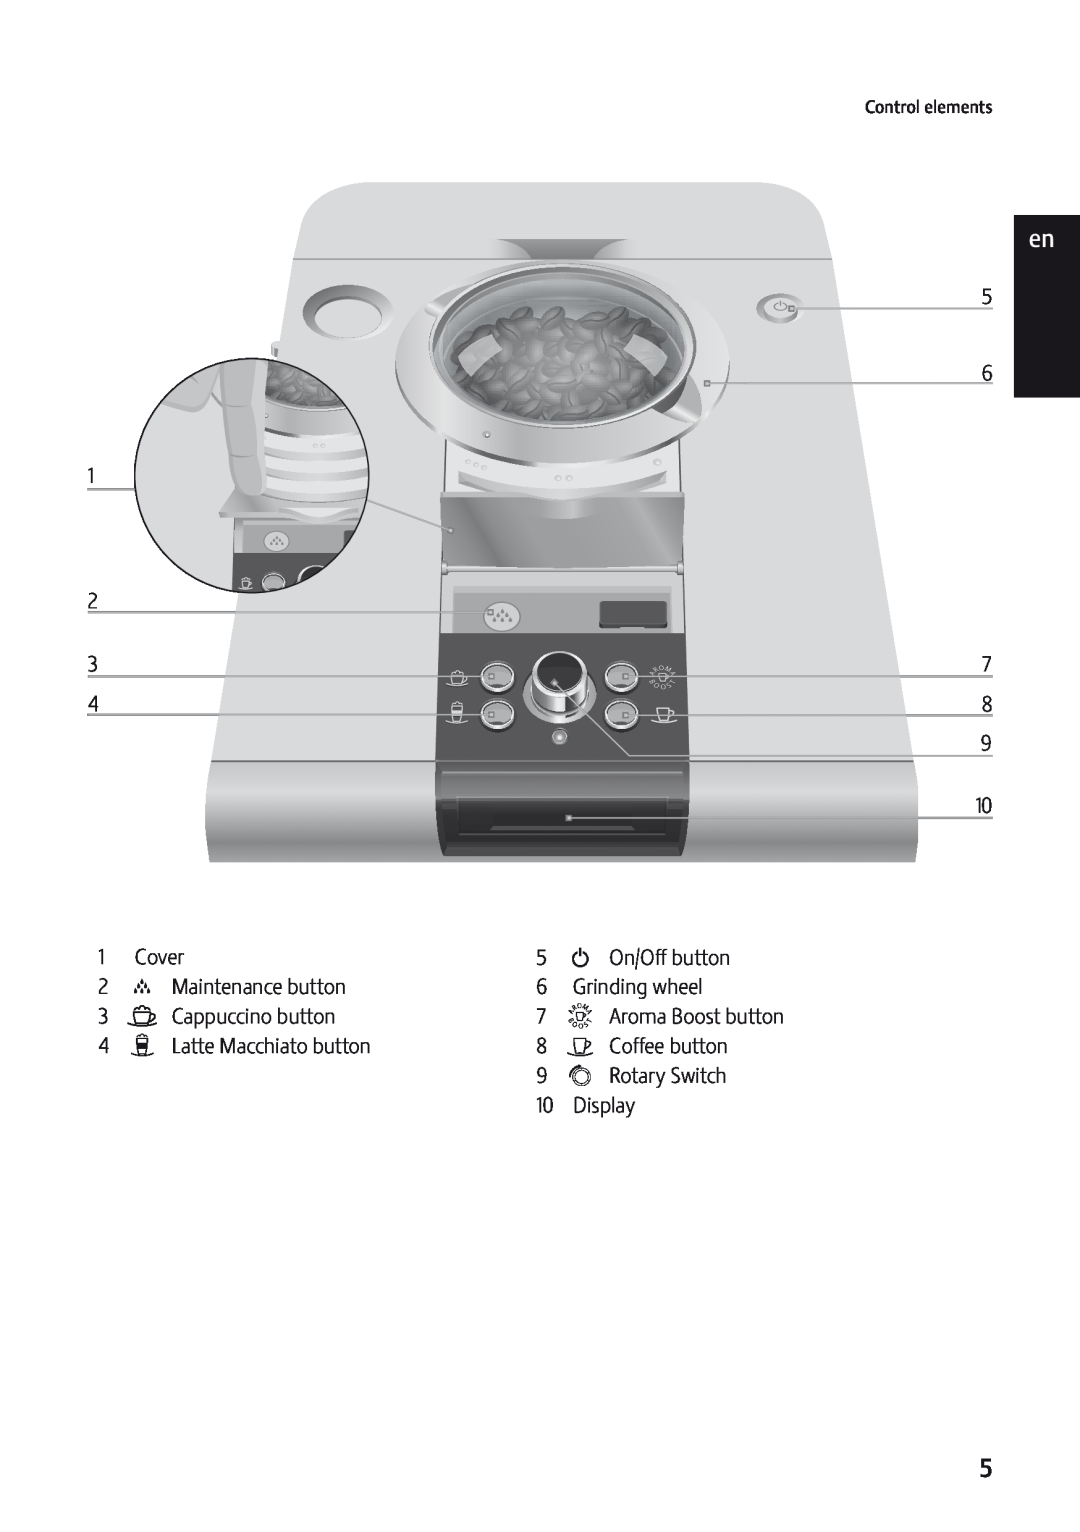 Jura Capresso 9 manual en fr it nl es pt, 1Cover, 2c Maintenance button 3 / Cappuccino button, Latte Macchiato button 